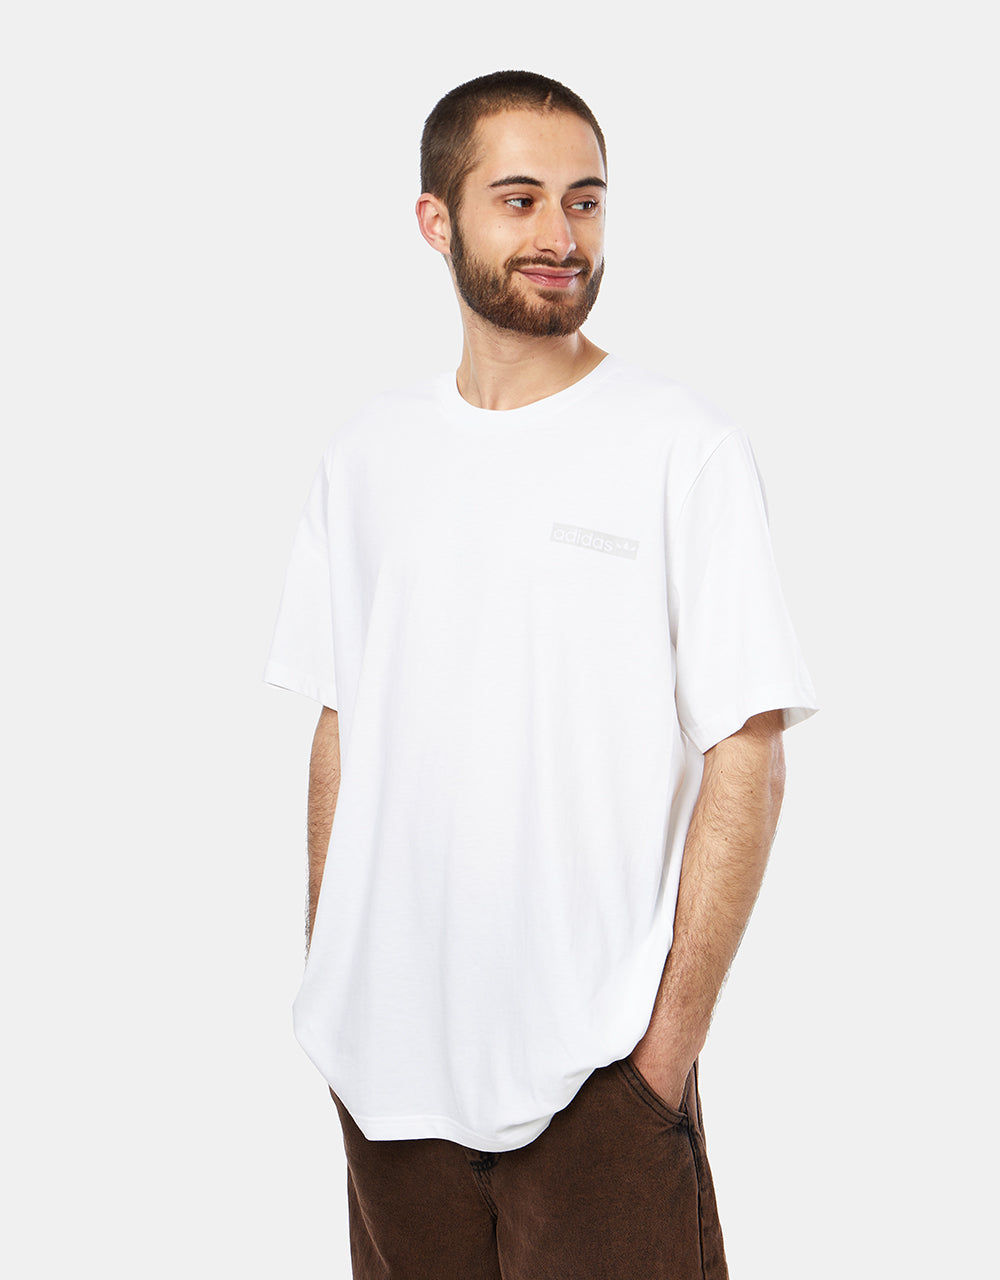 adidas 4.0 Circle T-Shirt - White/Grey One